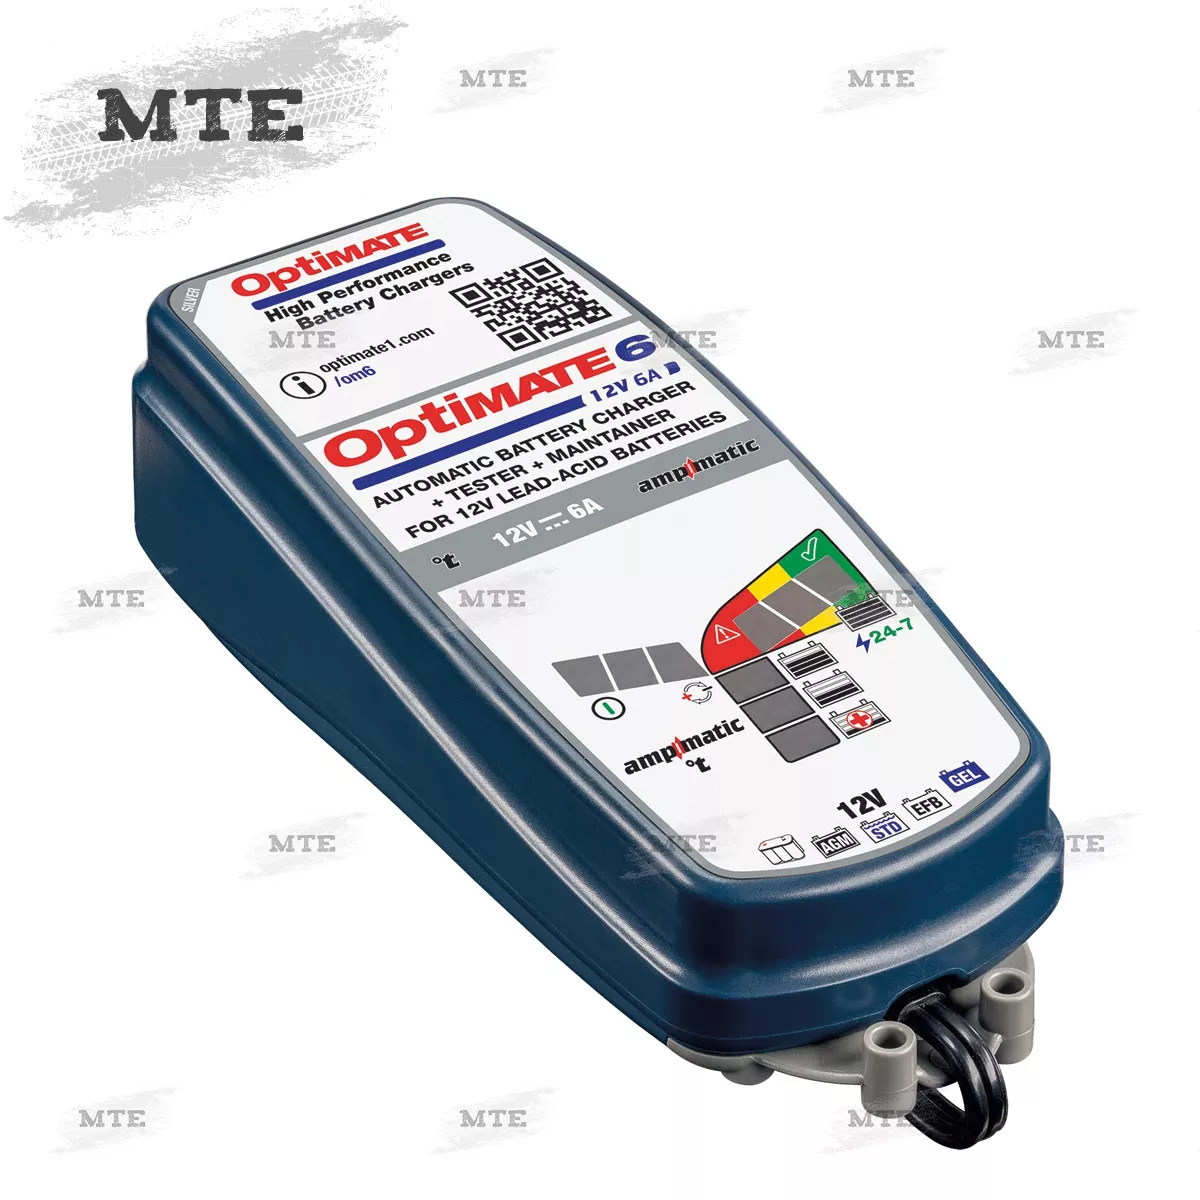 ACCUMATE Batterie-Ladegerät (6+12V), ohne Diagnosefunktion, inkl. Polklemmen  + Fahrzeugadapter mit wasserdichtem TM-Systemstecker